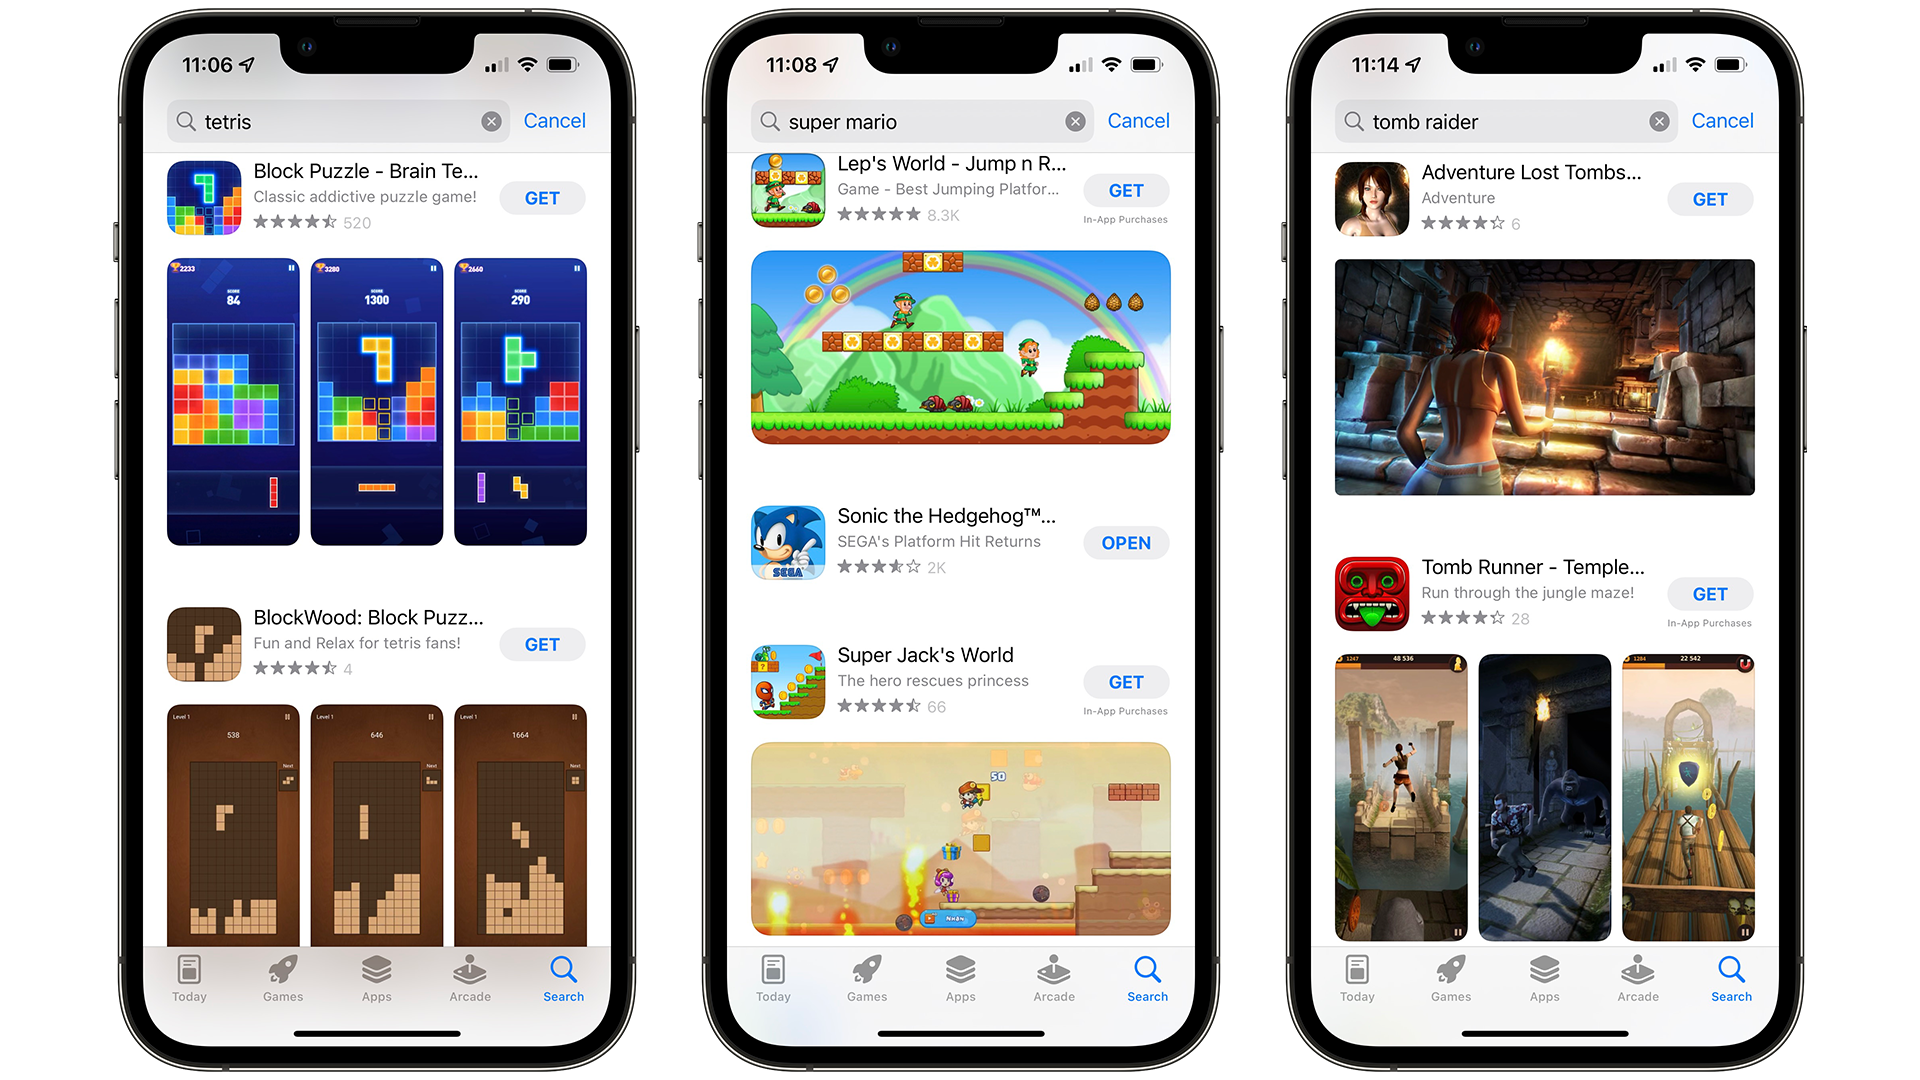 Tomb Raider, Sonic and Mario copycats on App Store